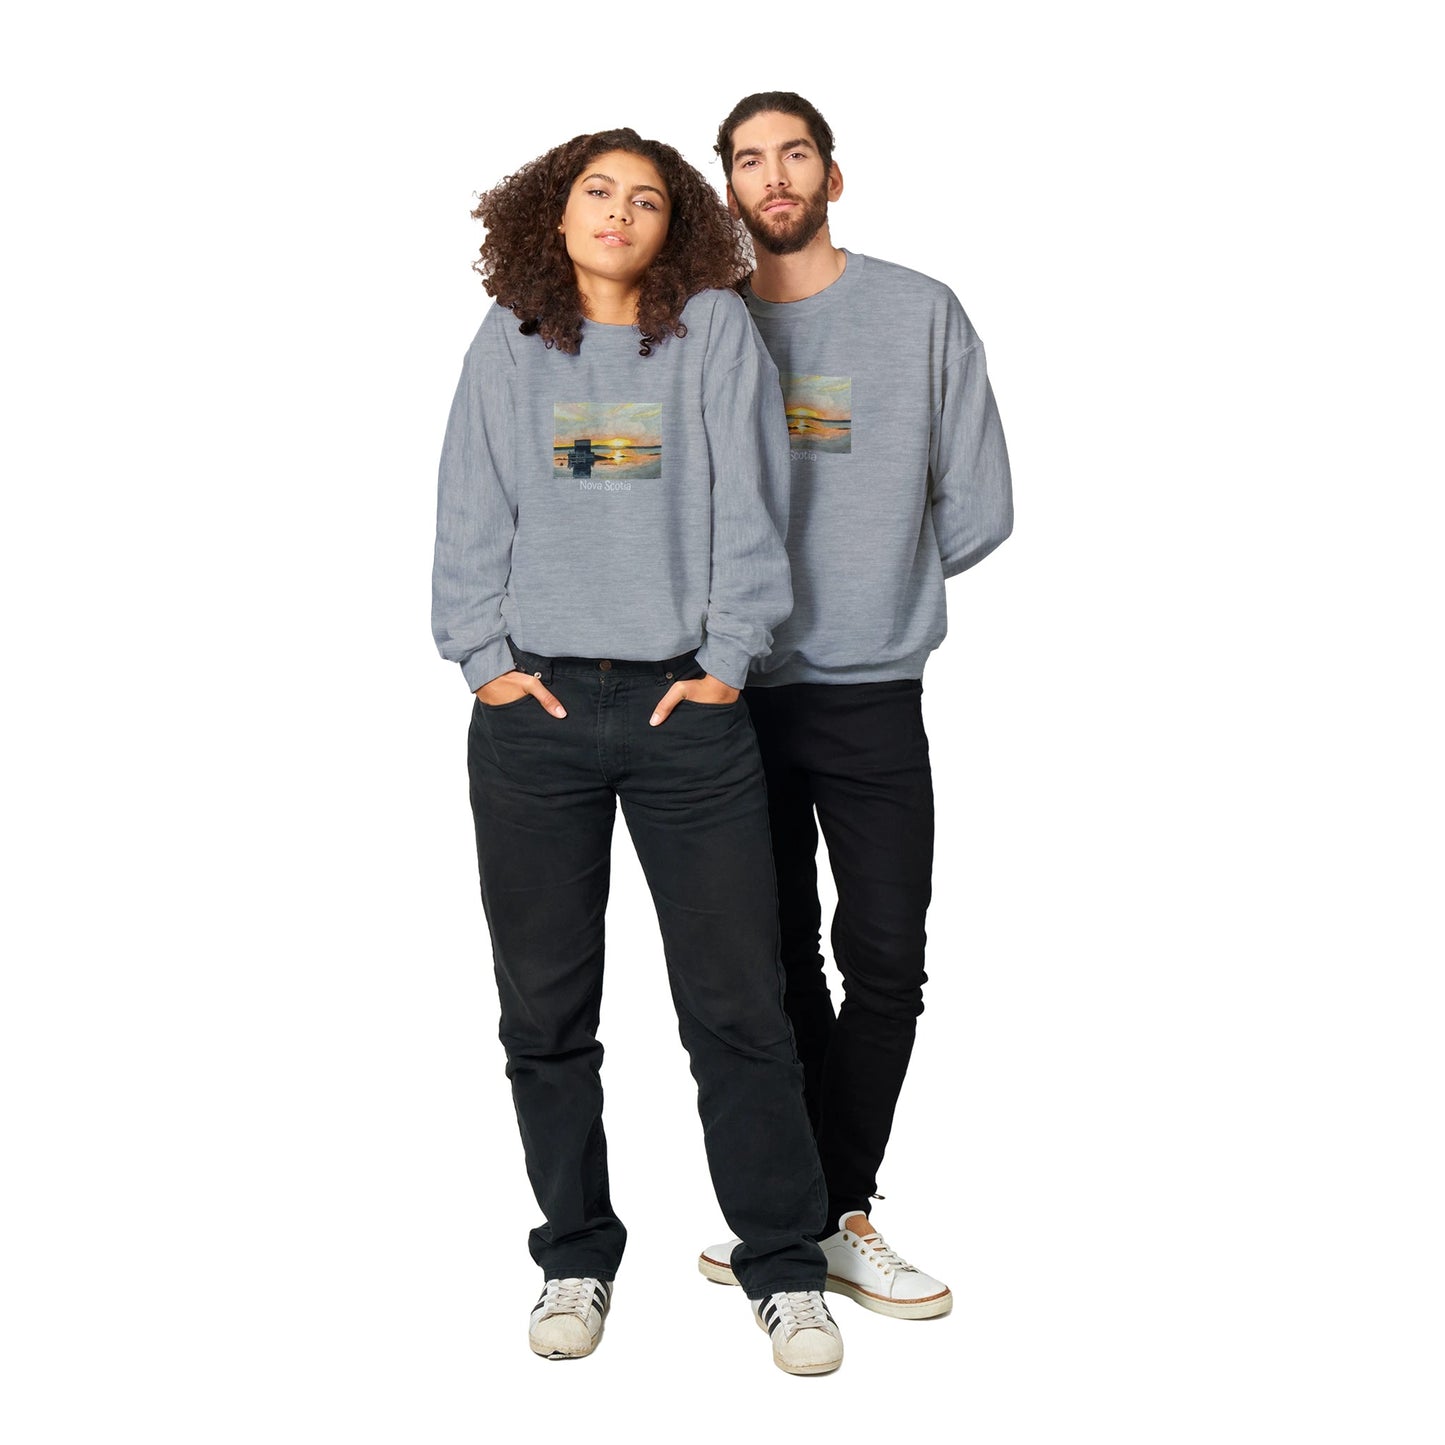 Blue Rocks Sunset - Unisex Crewneck Sweatshirt